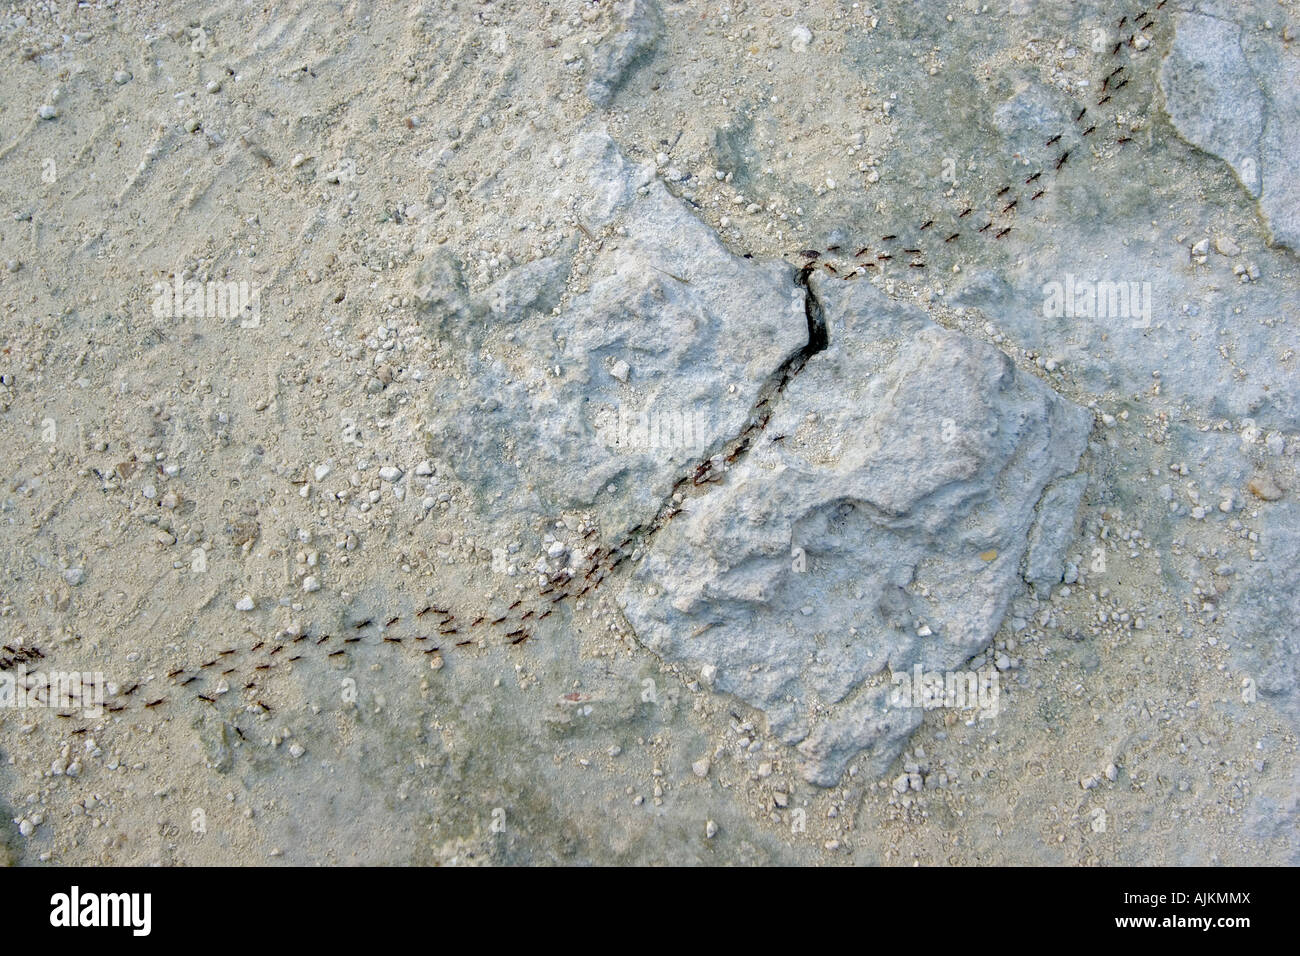 Una colonia di formiche procedendo su una pista (Yucatán- Messico). Colonie de foumis Formica (sp) traversant onu chemin (Yucatán - Mexique). Foto Stock